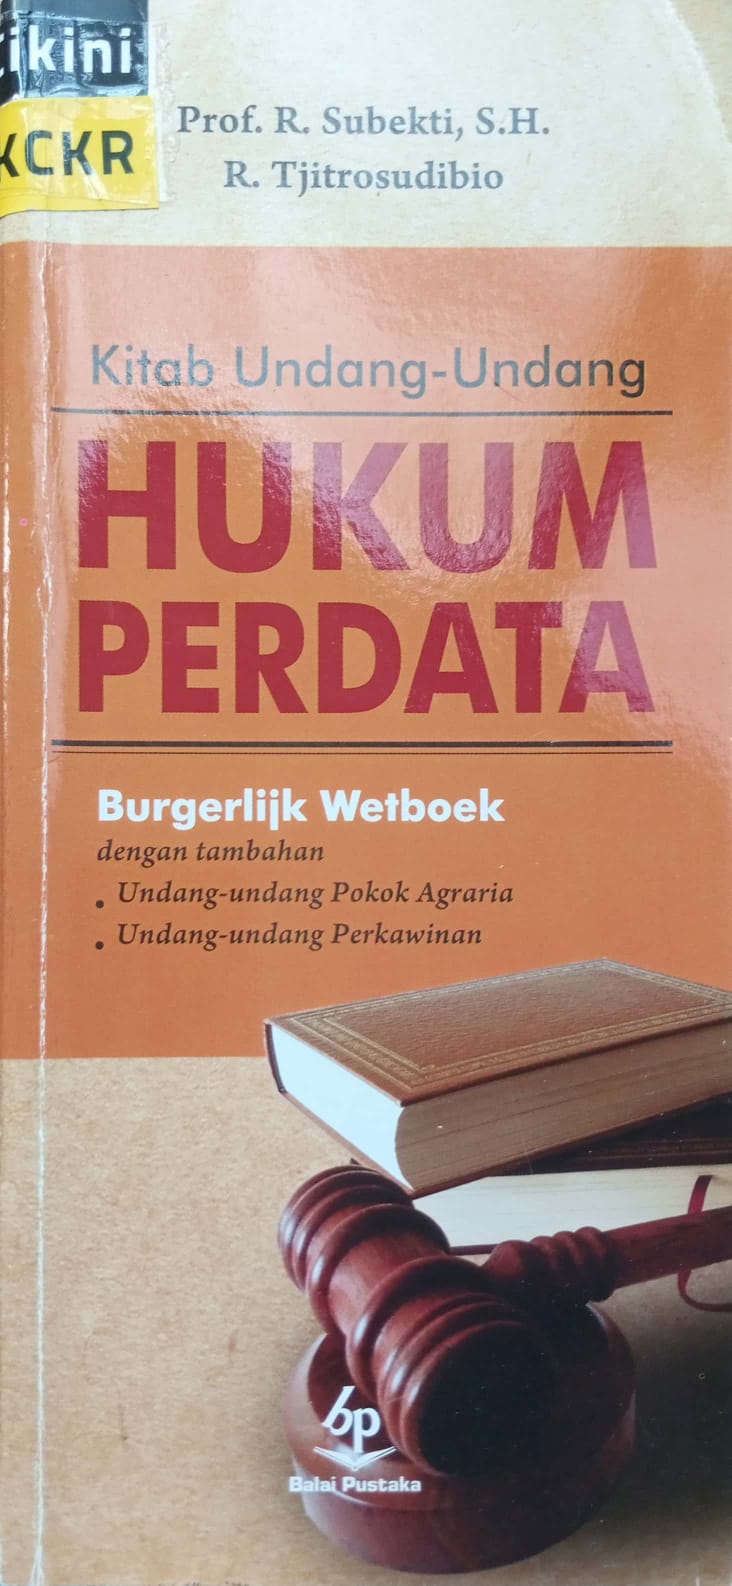 Kitab undang-undang hukum perdata = Burgerlijk wetboek